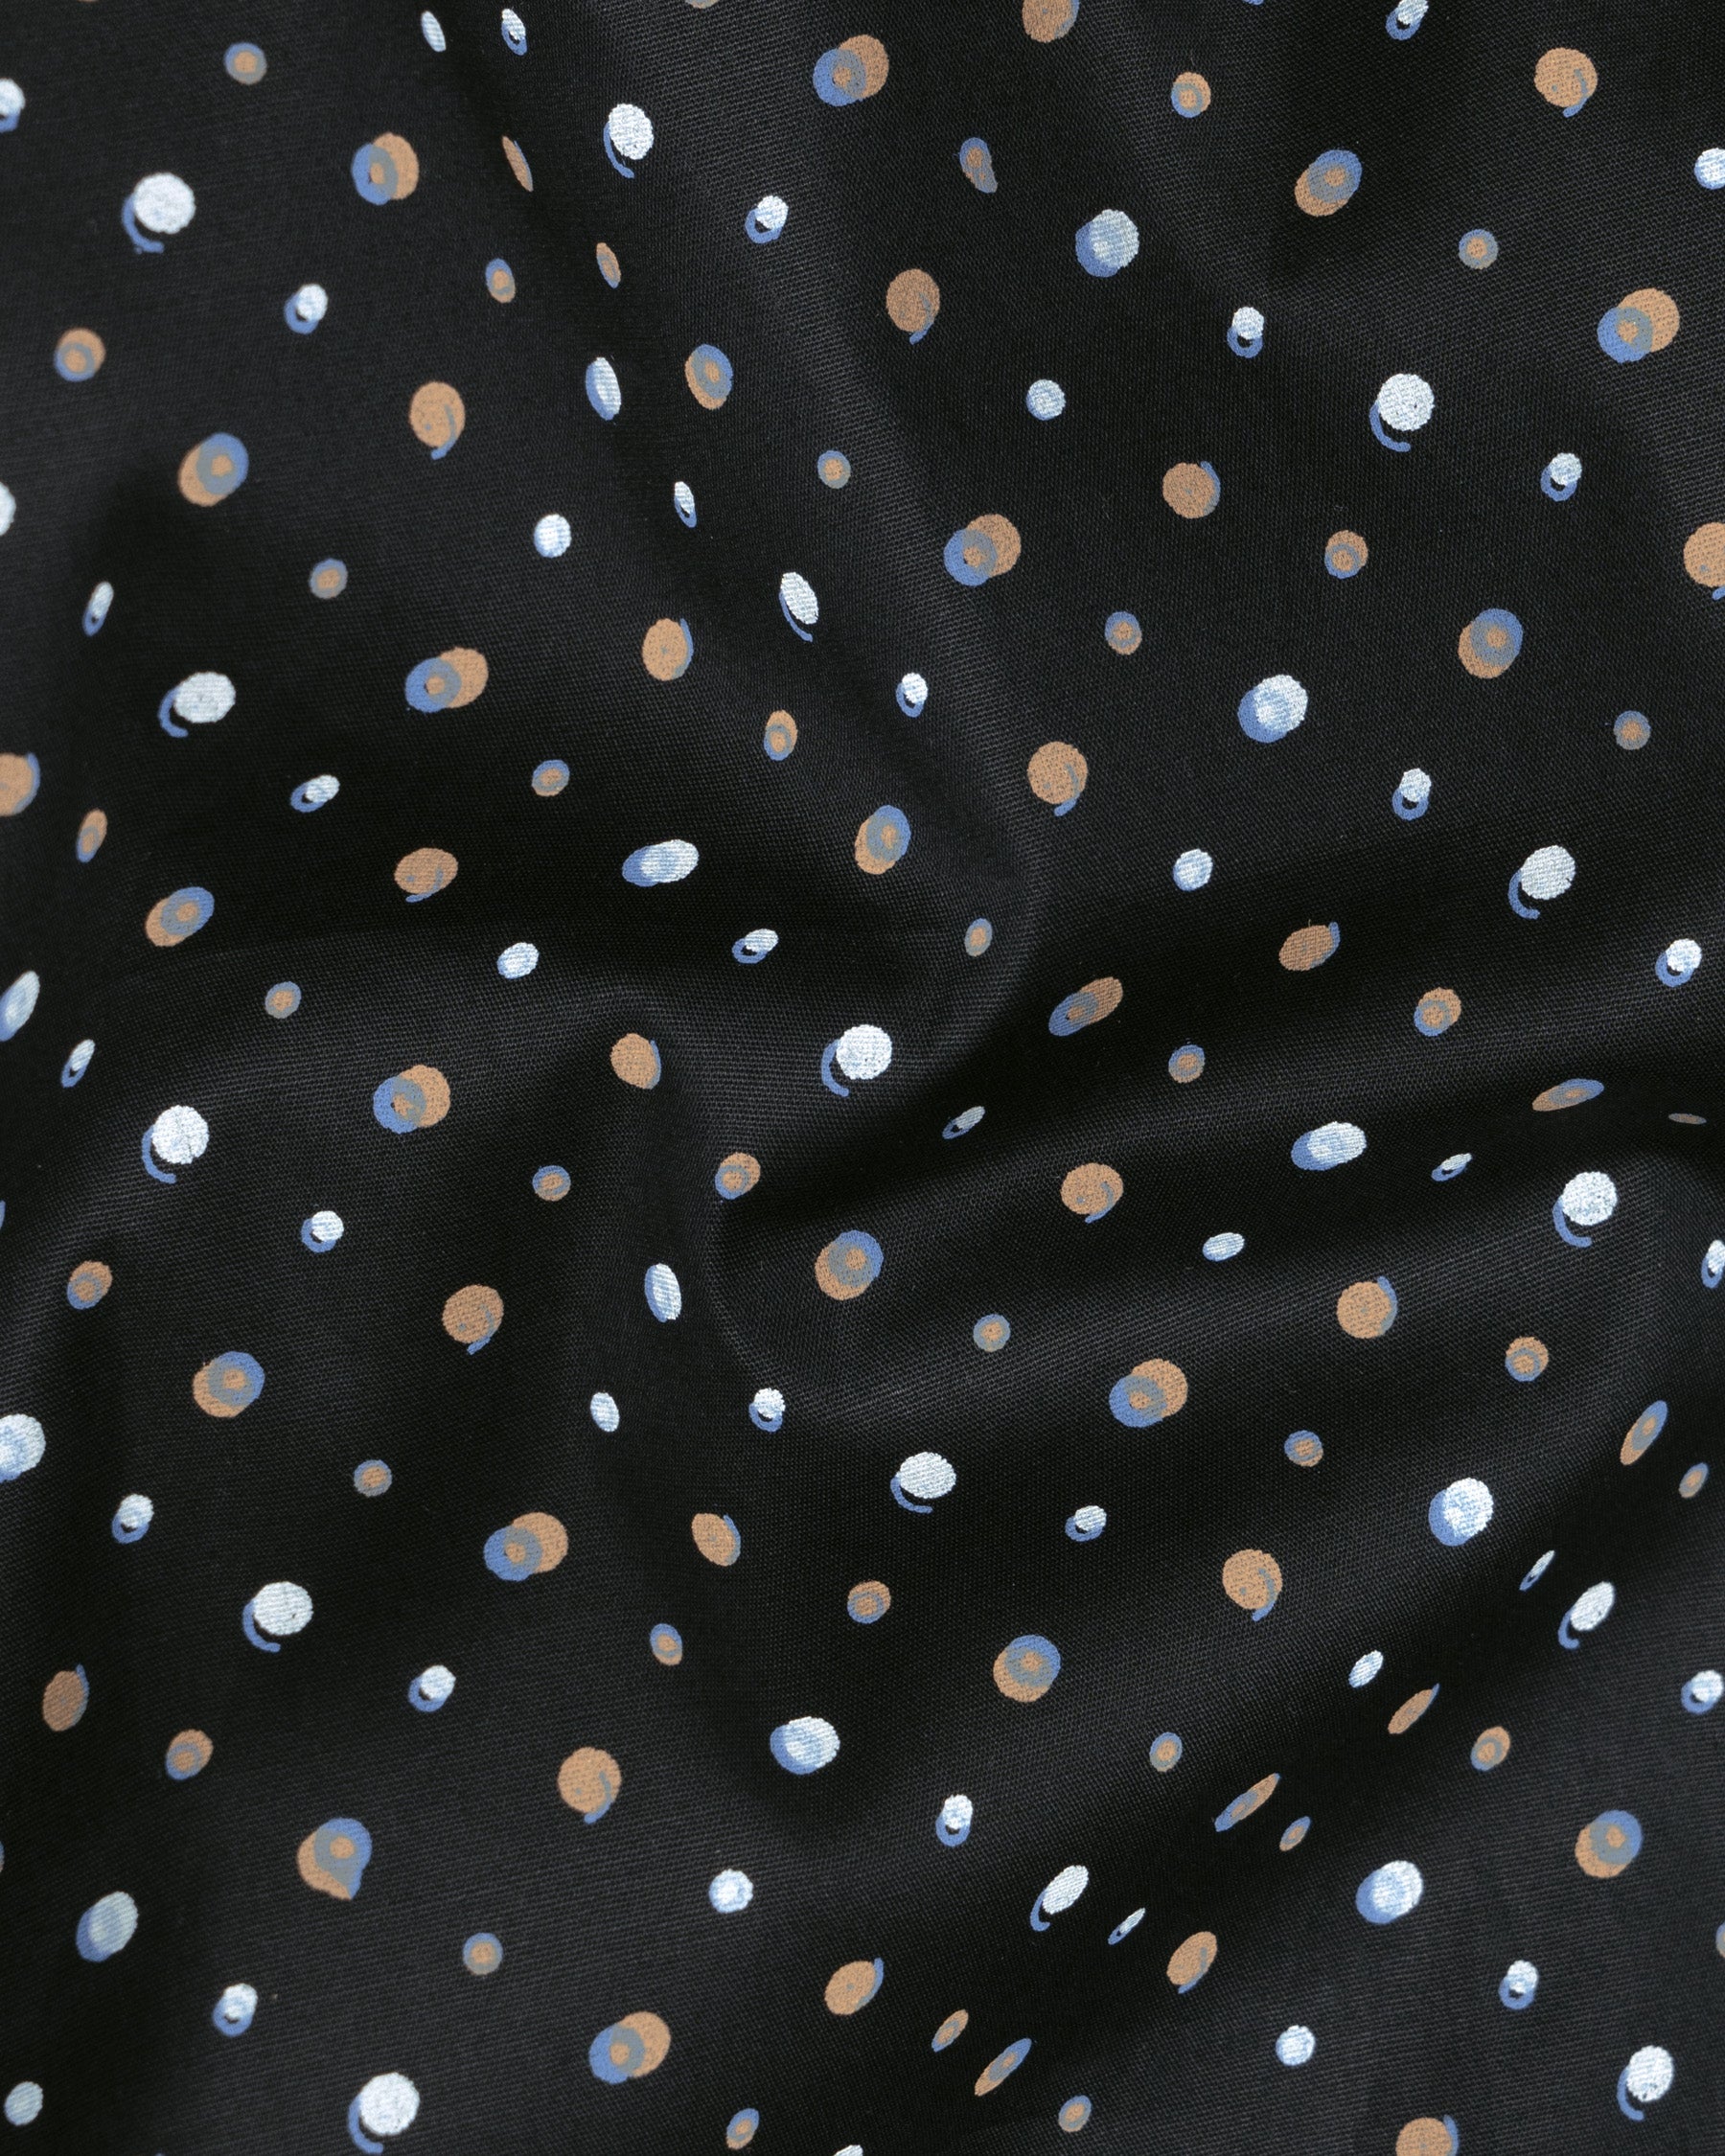 Jade Black Dots Printed Premium Cotton Shirt 5257-M-38, 5257-M-H-38, 5257-M-39, 5257-M-H-39, 5257-M-40, 5257-M-H-40, 5257-M-42, 5257-M-H-42, 5257-M-44, 5257-M-H-44, 5257-M-46, 5257-M-H-46, 5257-M-48, 5257-M-H-48, 5257-M-50, 5257-M-H-50, 5257-M-52, 5257-M-H-52